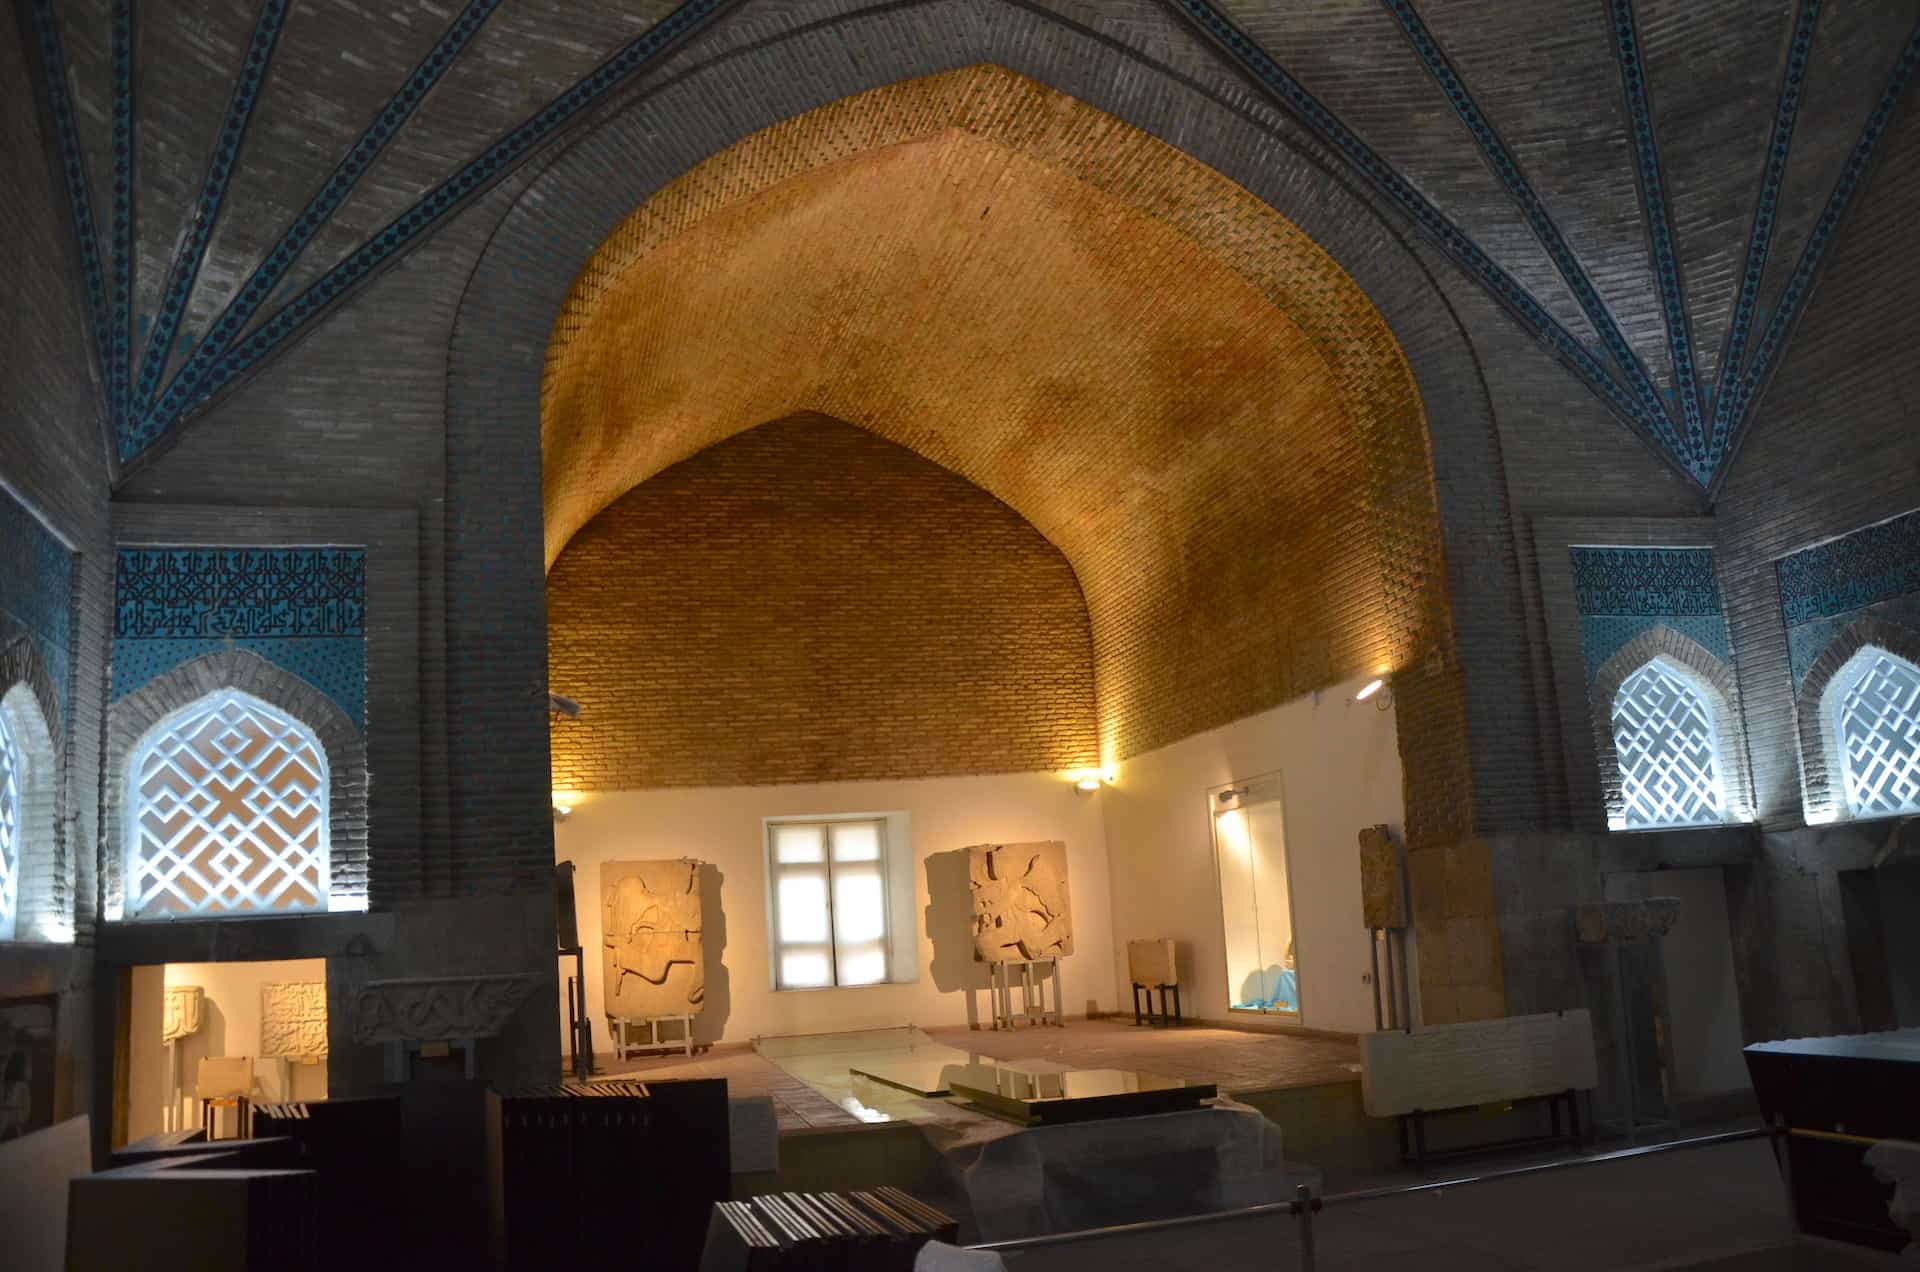 Ince Minareli Madrasa in Konya, Turkey